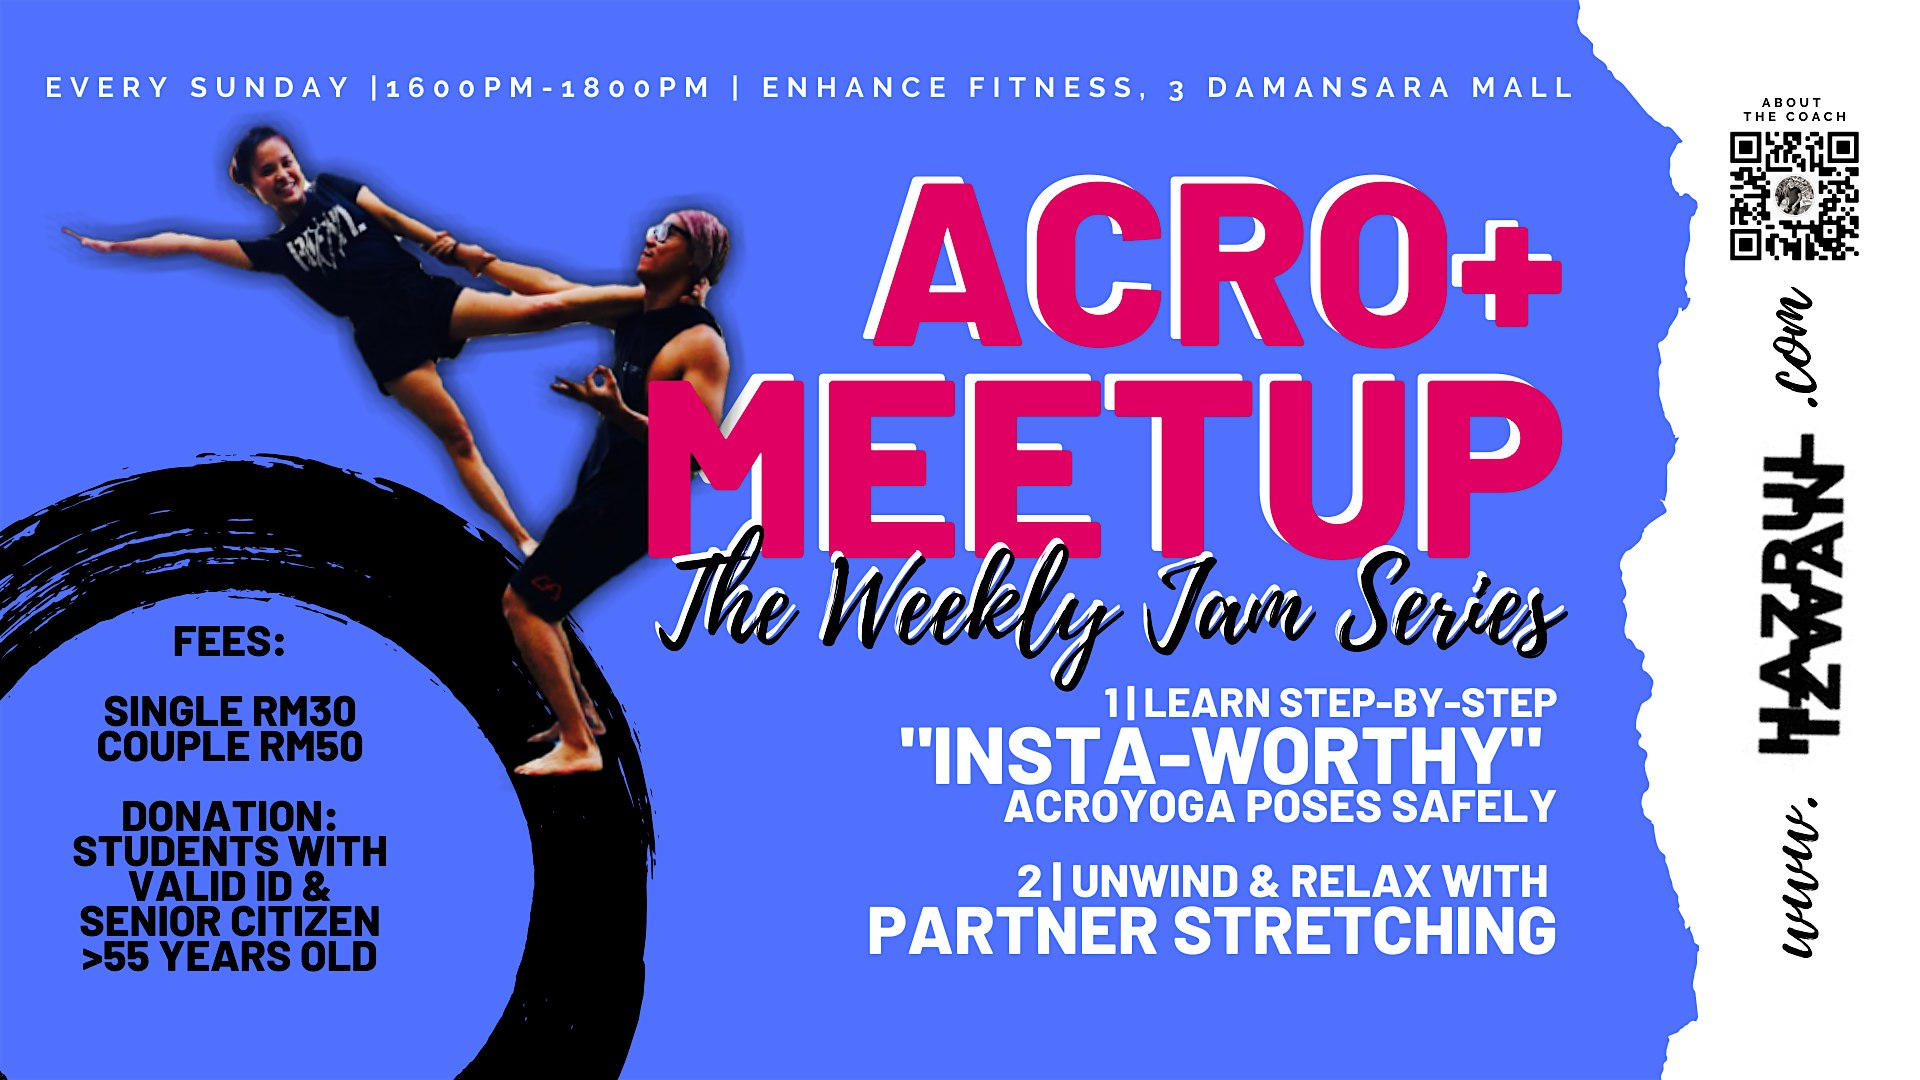 Acro+ Meetup: The Weekly Jam Series